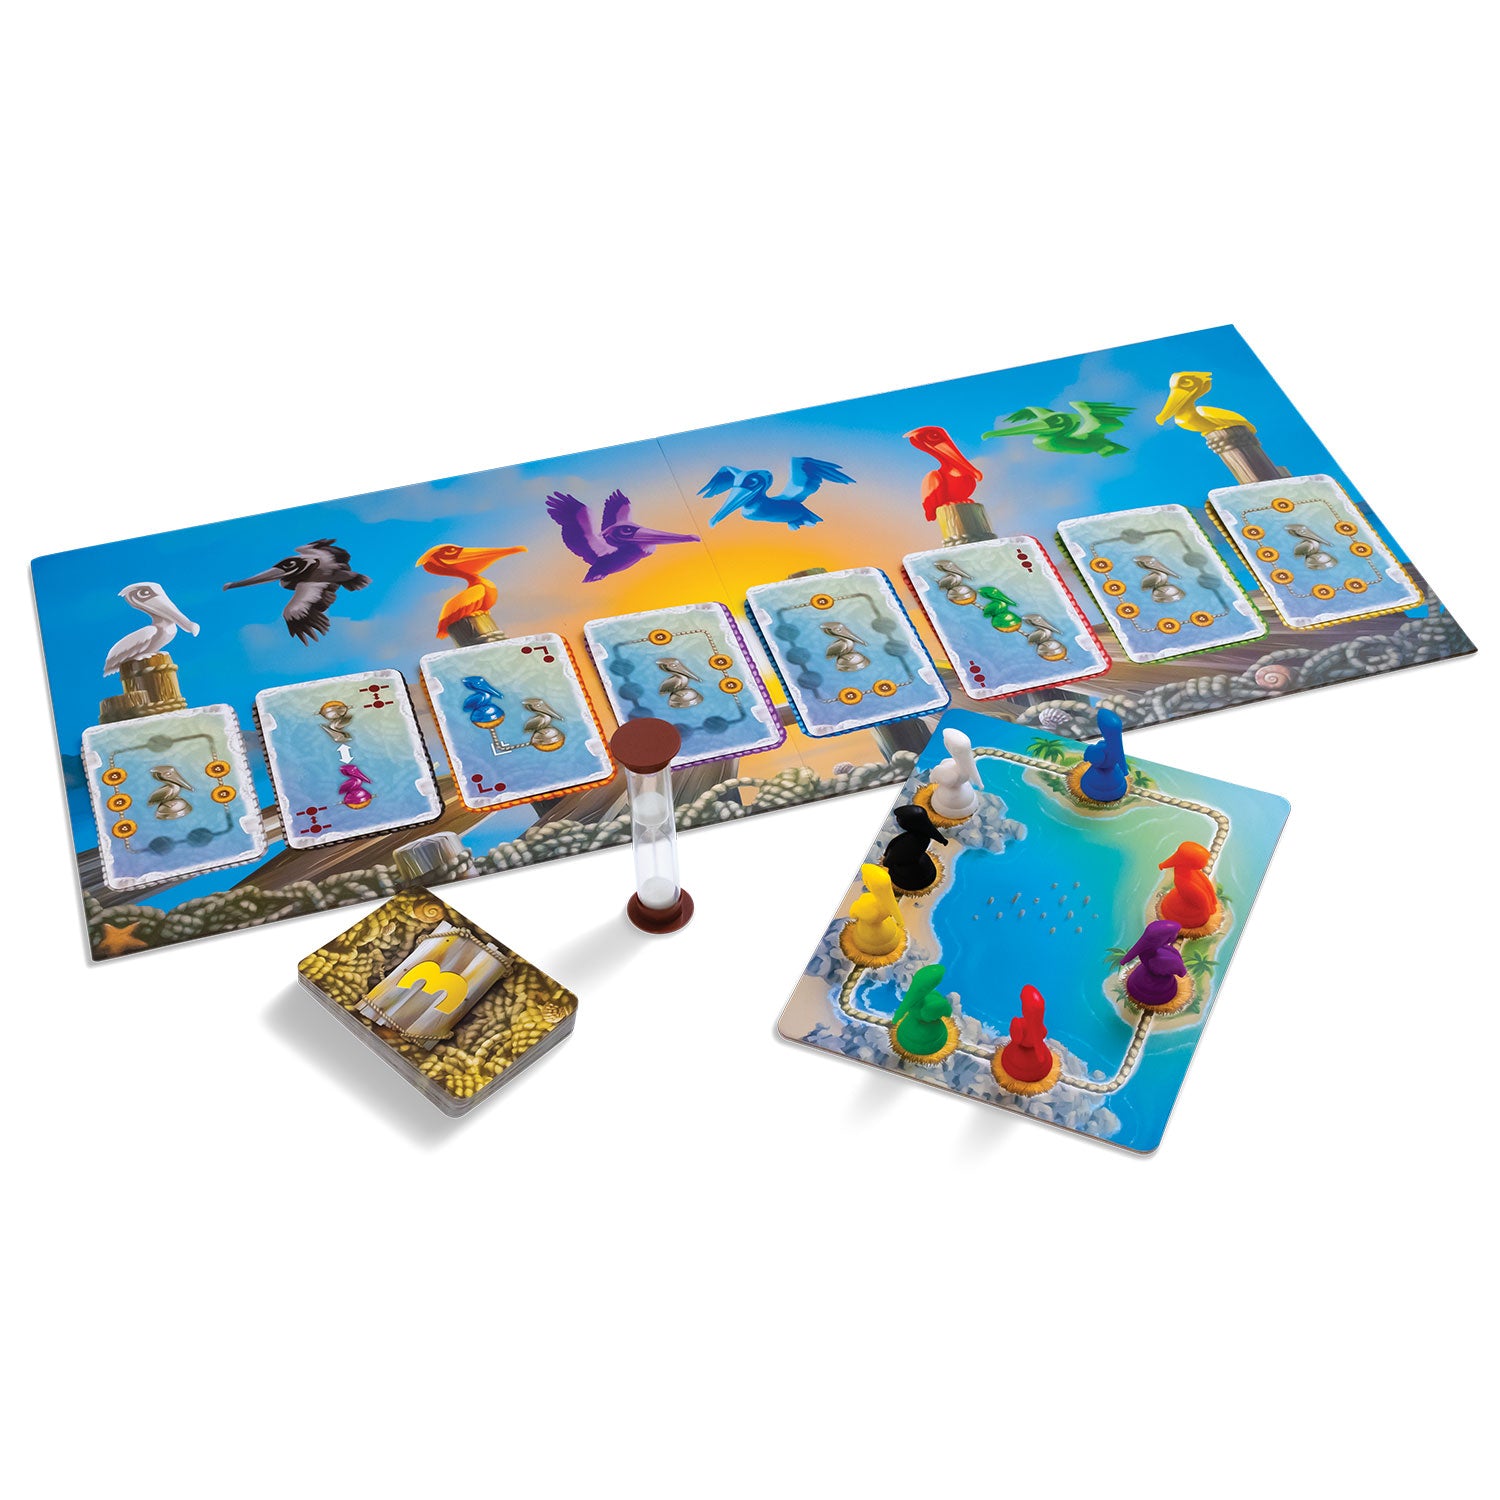 Pelican Cove: Algebra strategy board game